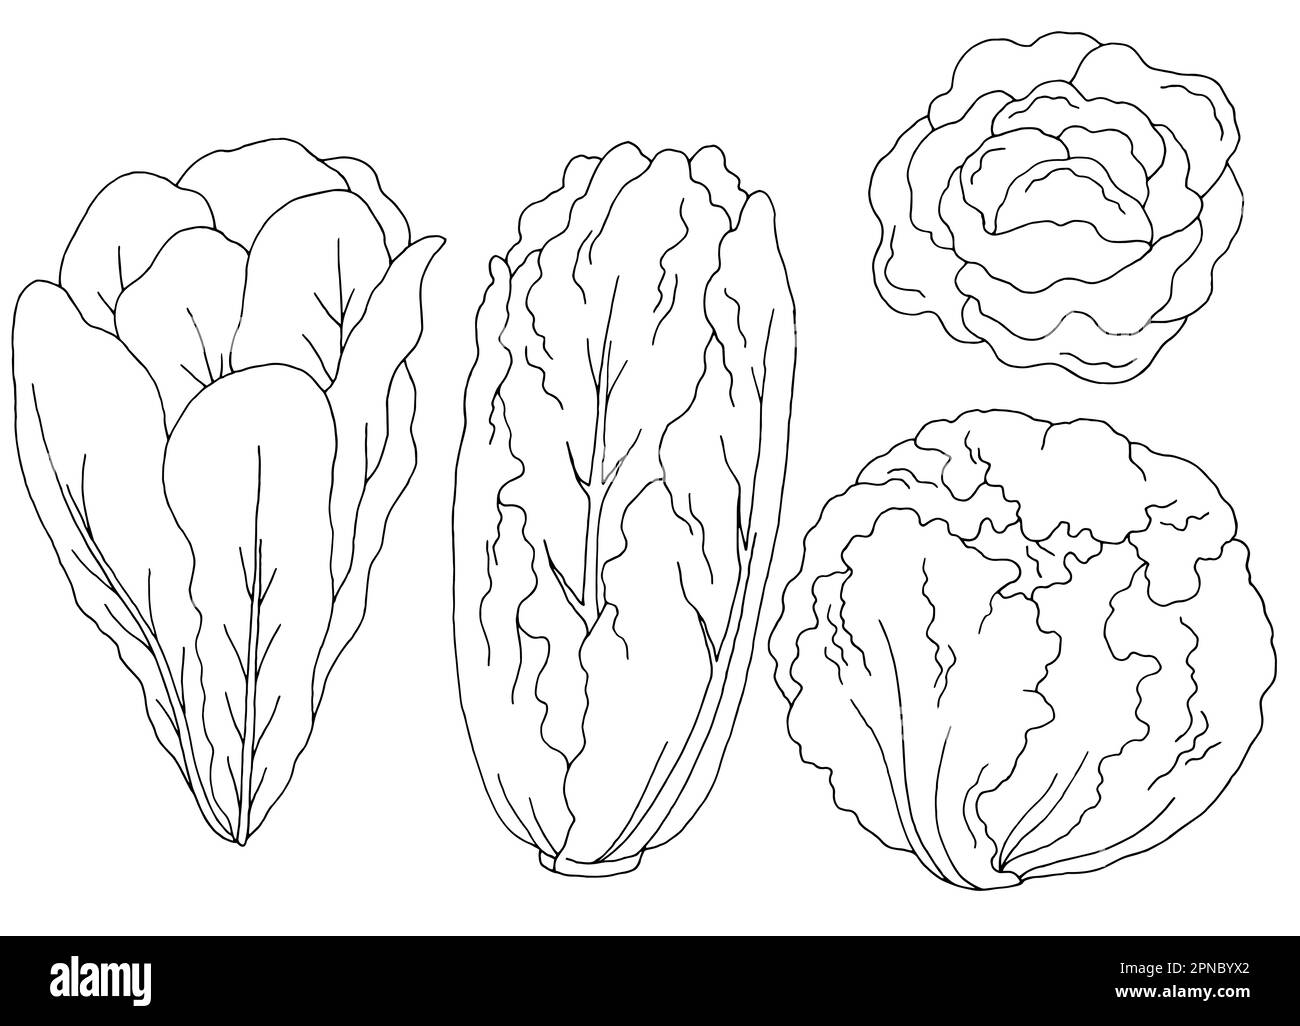 Lettuce set graphic black white isolated sketch illustration vector Stock Vector